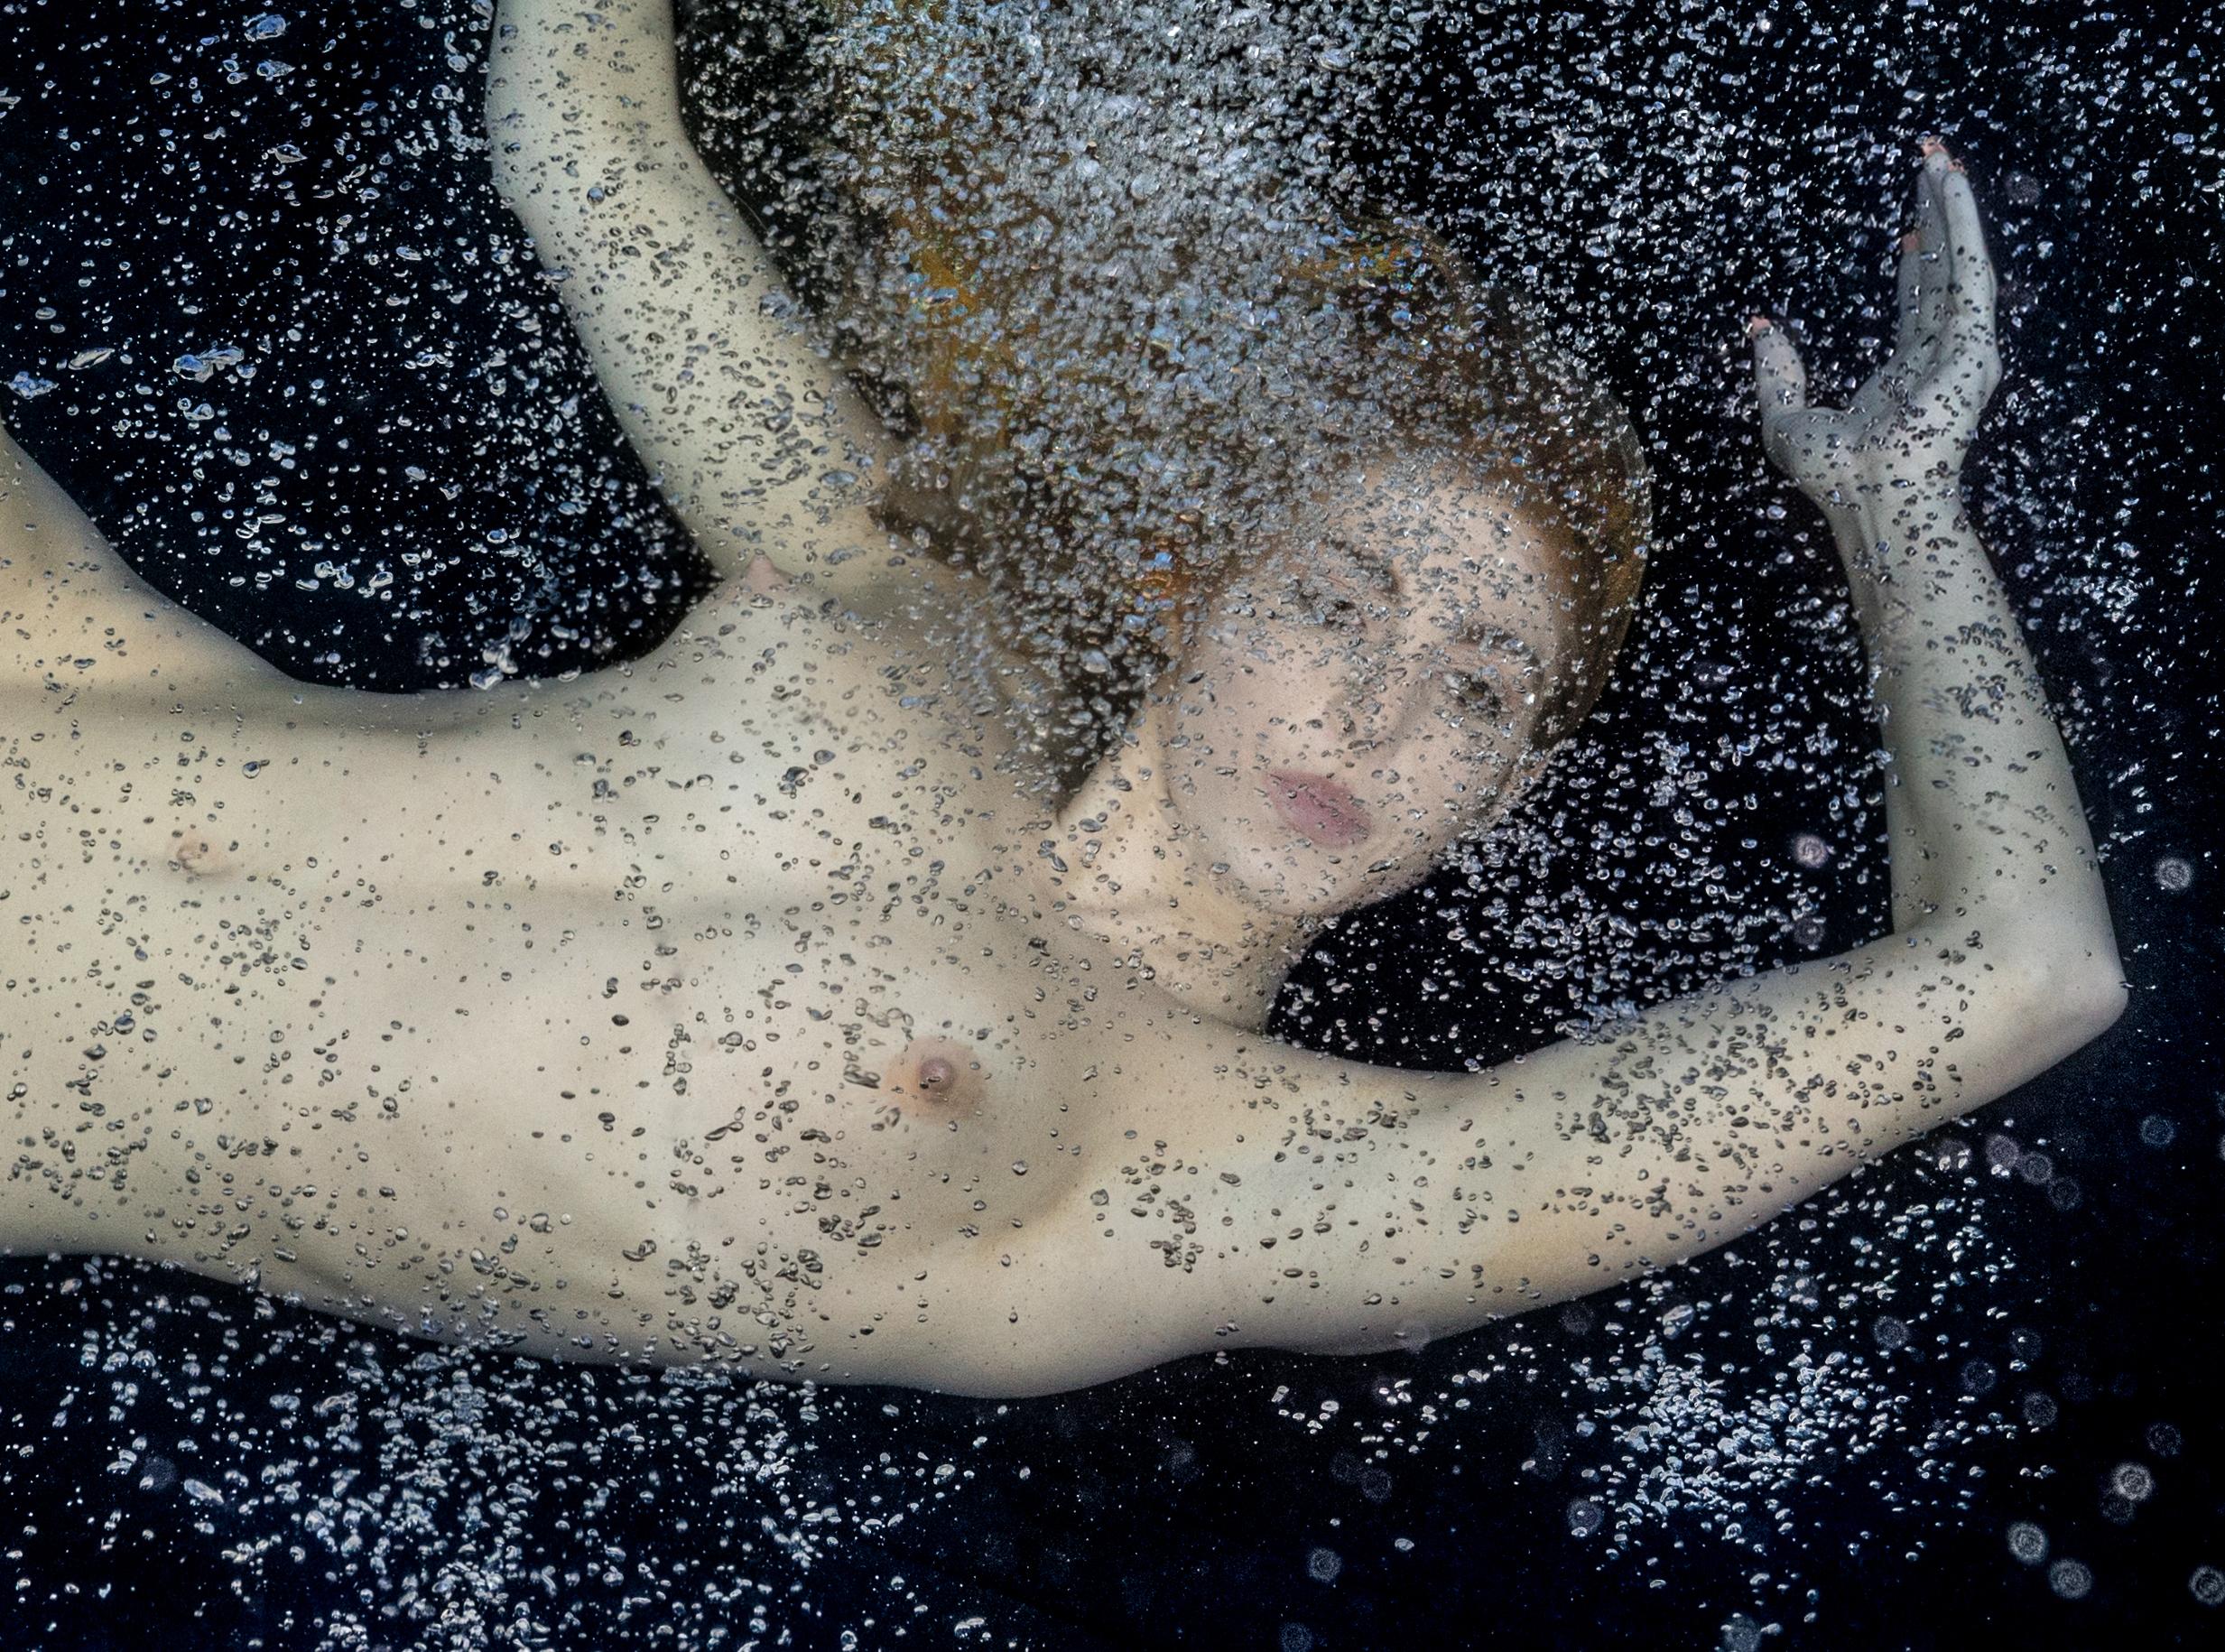 Danae - underwater nude photograph - archival pigment 17